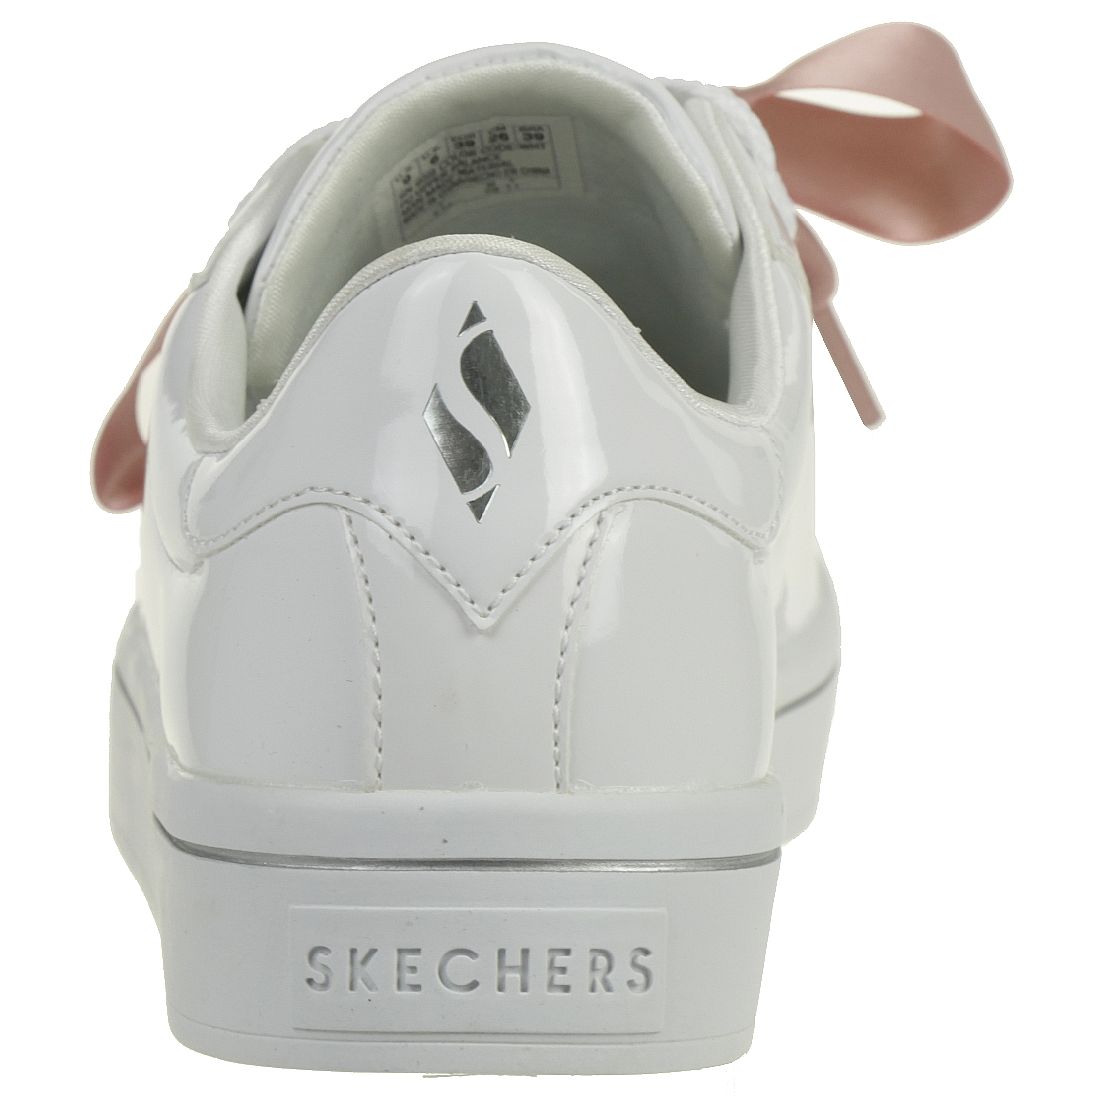 Skechers Hi-Lites SLICK SHOES Damen Sneaker weiss lack 959 WHT